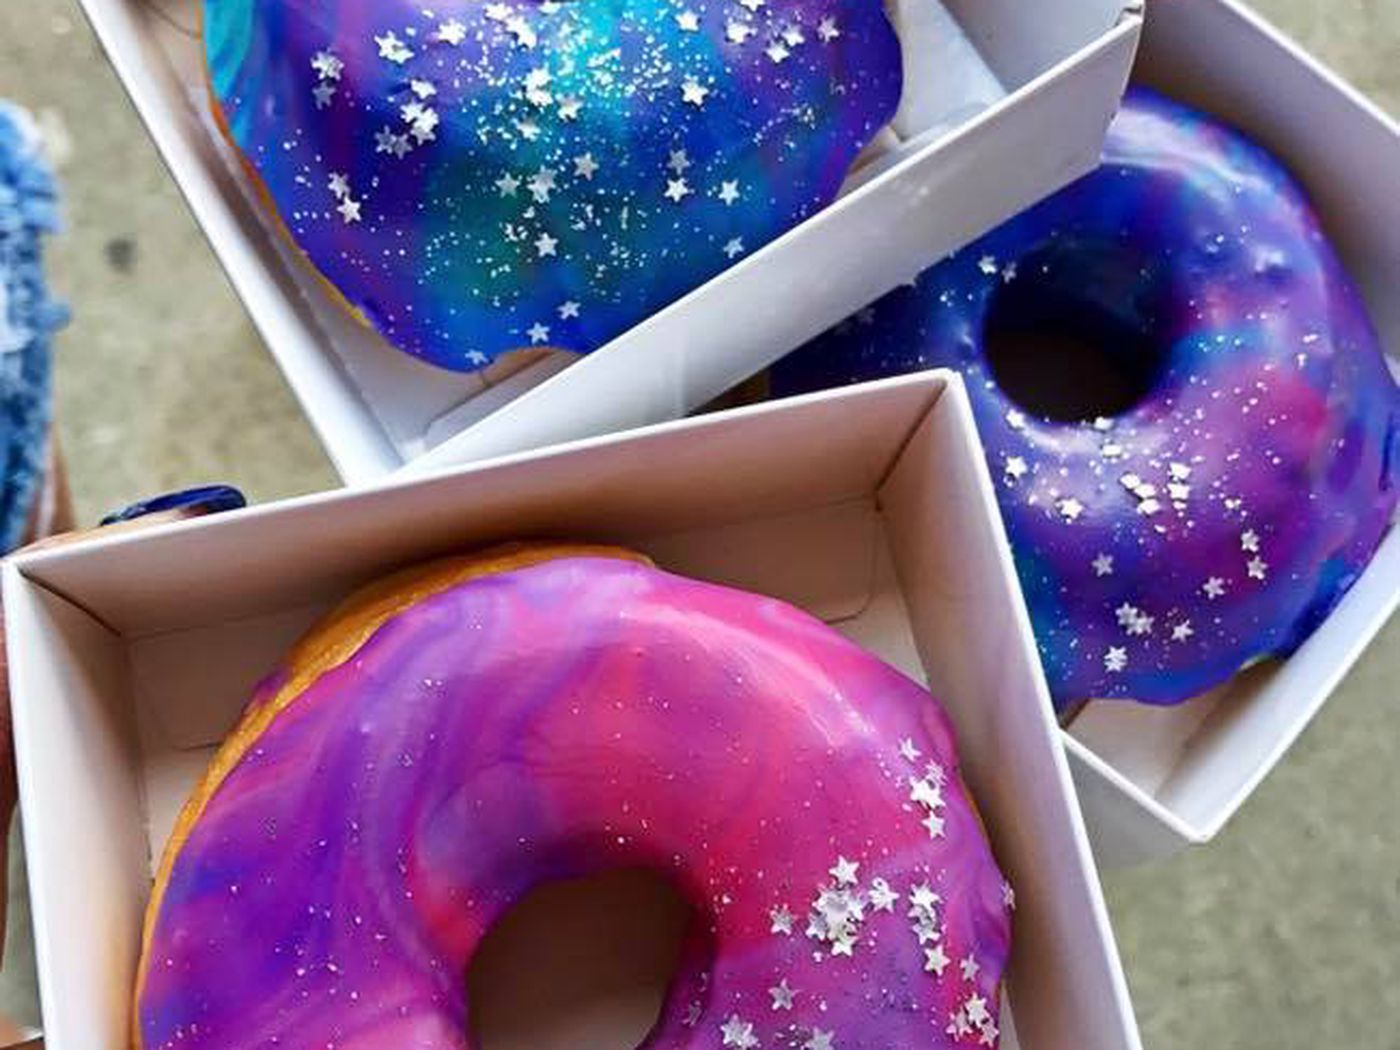 Sweet Daze's Instagram Worthy Galaxy Doughnuts & Black Ice Cream Will Soon Arrive